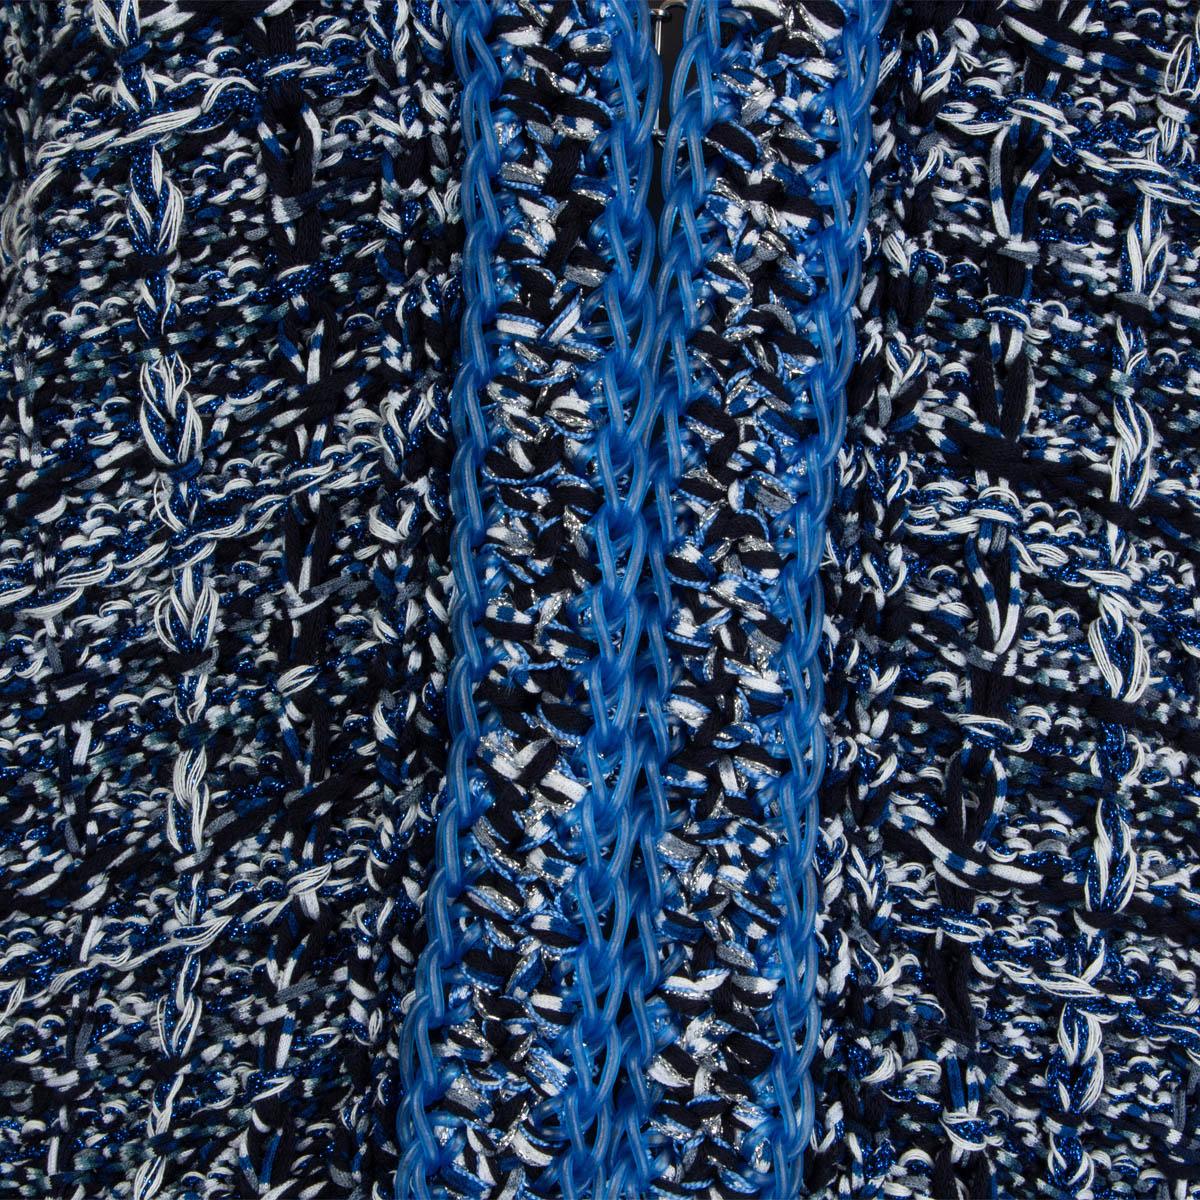 CHANEL blue cotton 2017 CHAIN EMBELLISHED OVERSIZED CROCHET KNIT Jacket 38 S 3